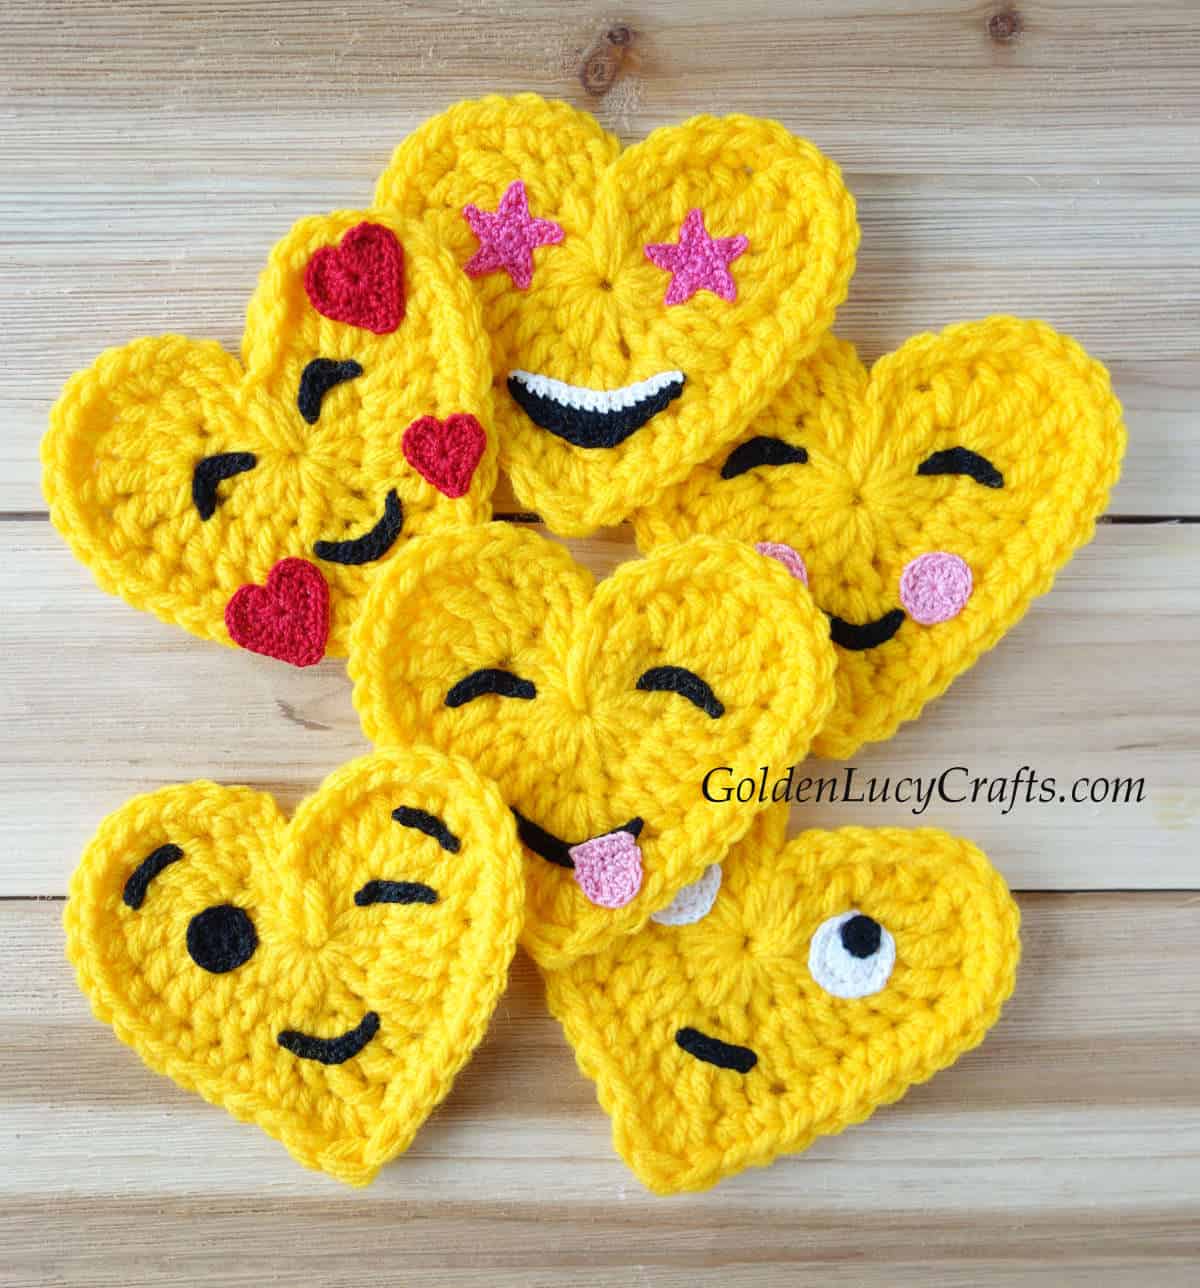 Six crocheted heart-shaped emojis.